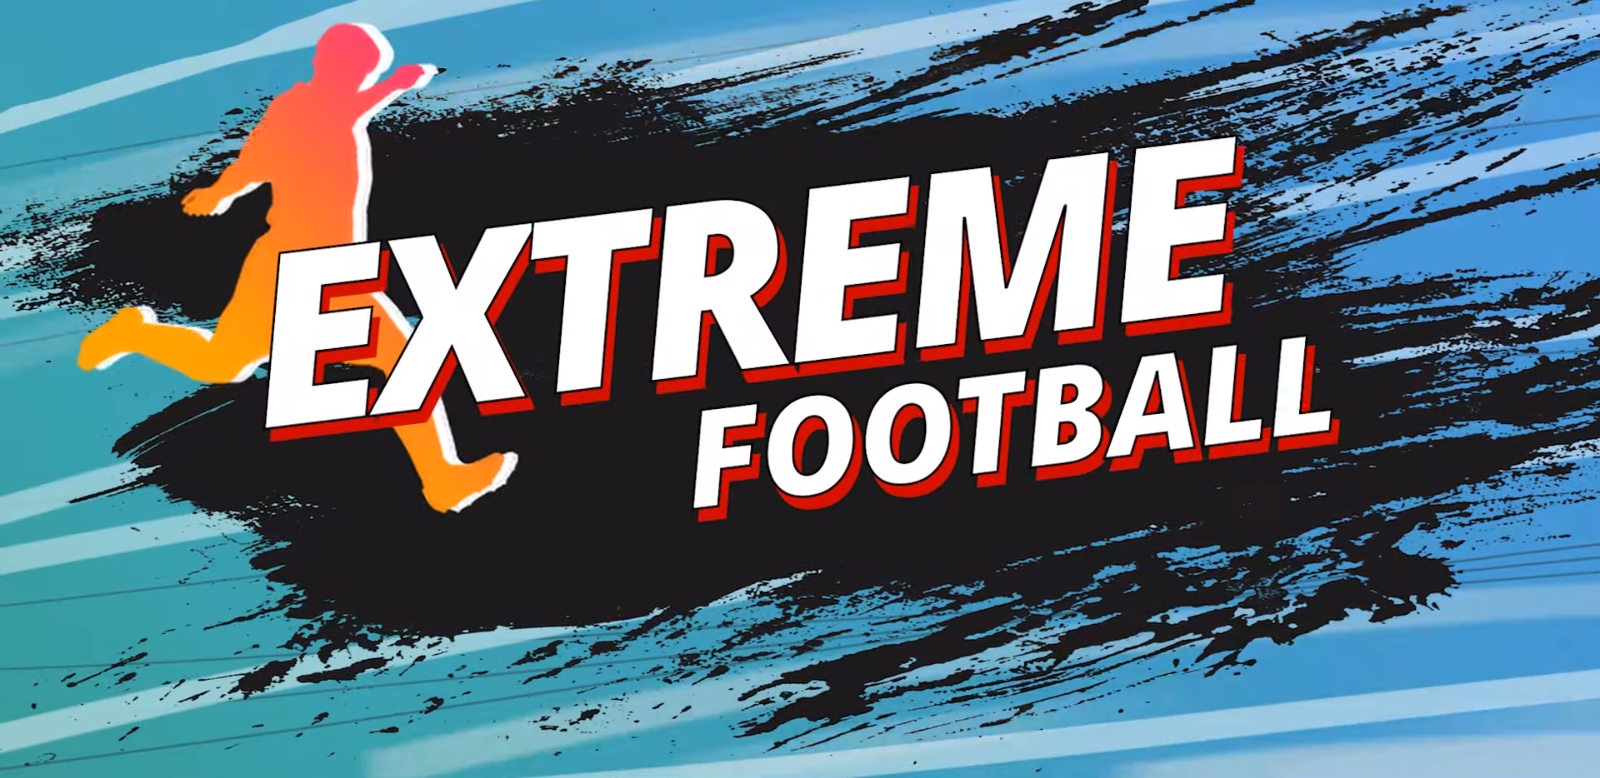 Extreme Football 1392019 1